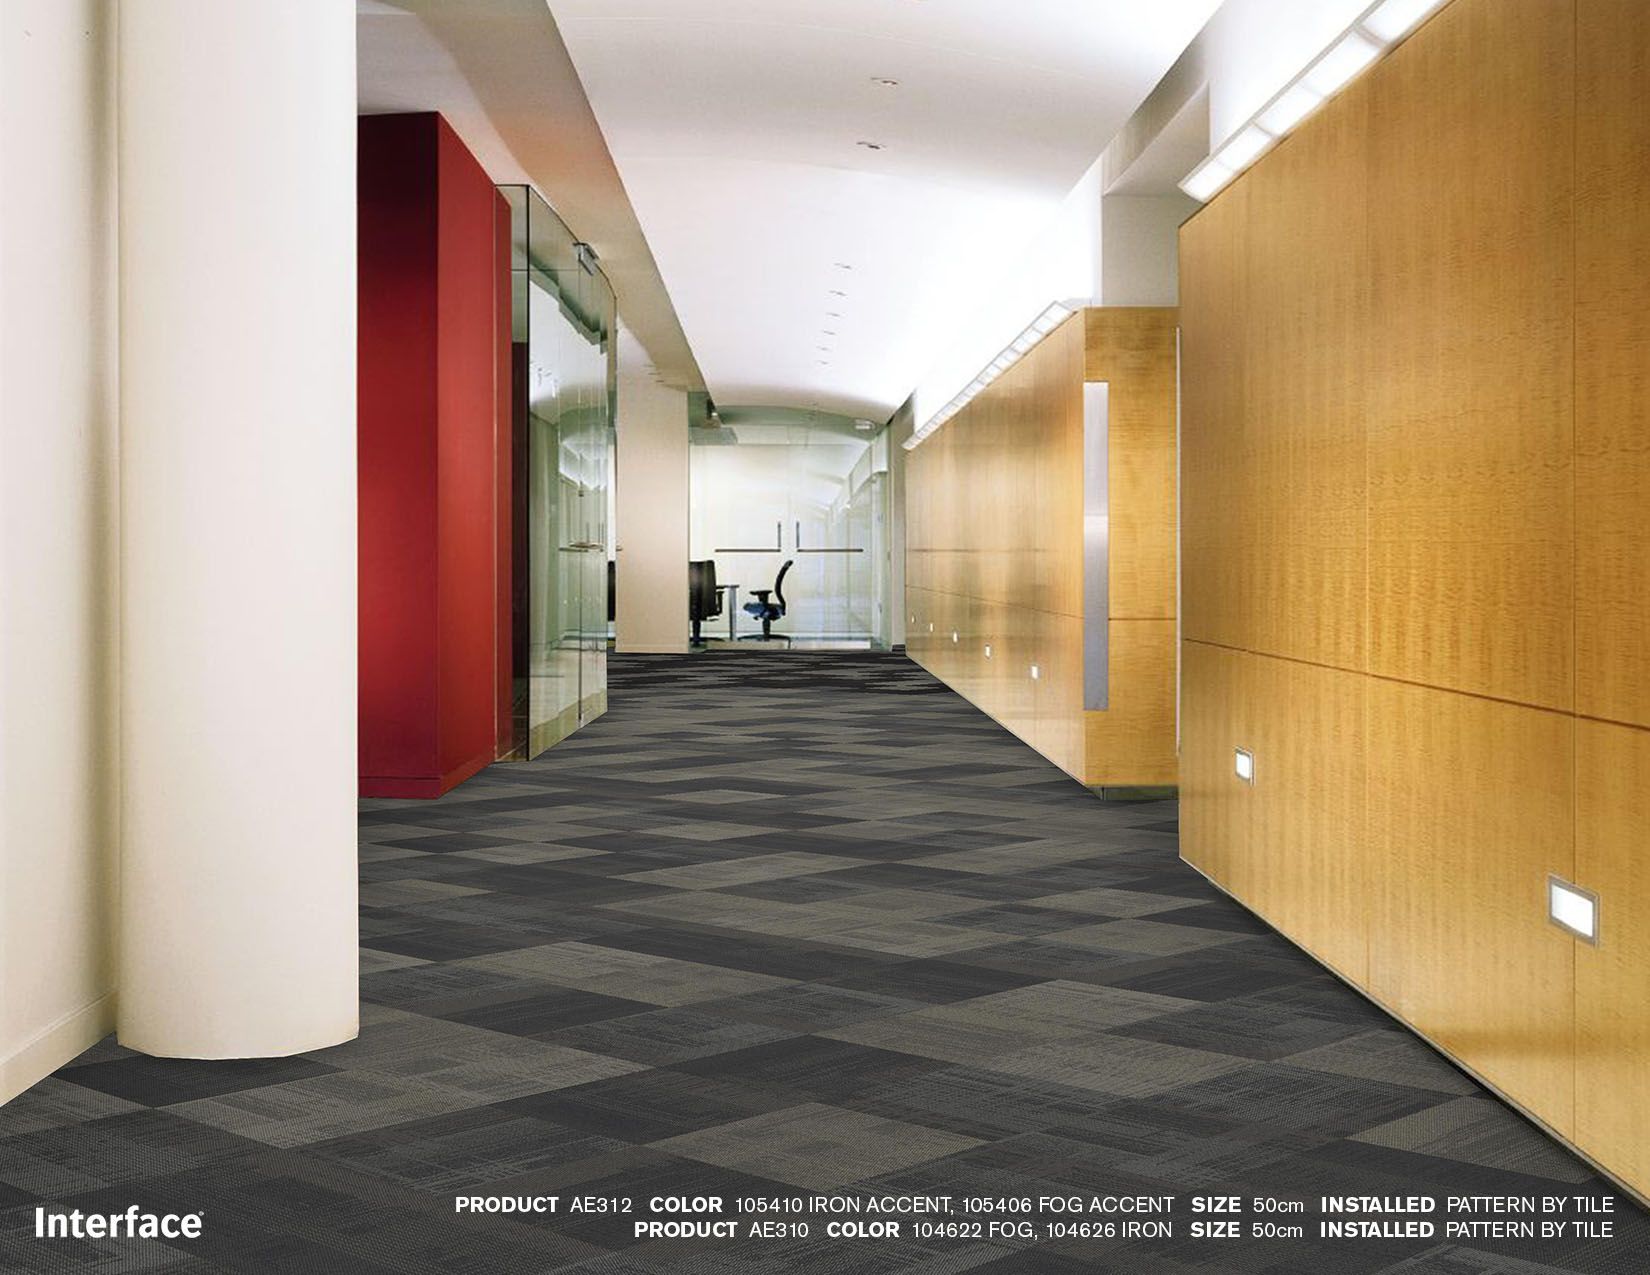 Interface SR899 and AE312 carpet tile in hallway scene numéro d’image 2